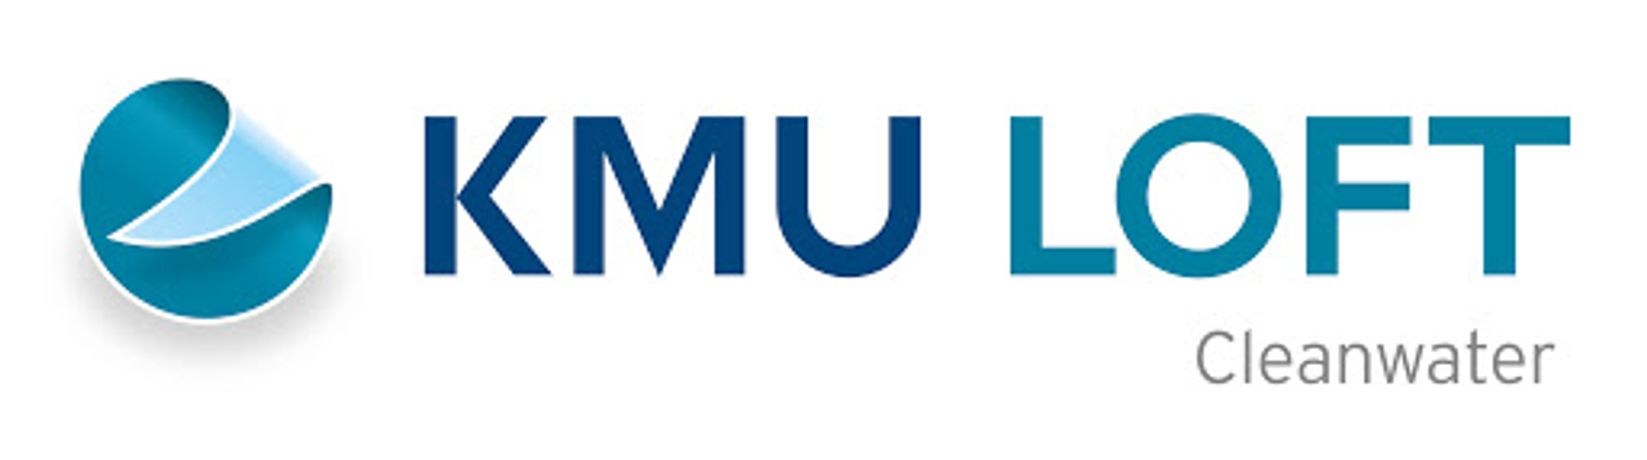 KMU LOFT - Operating Supplies Services